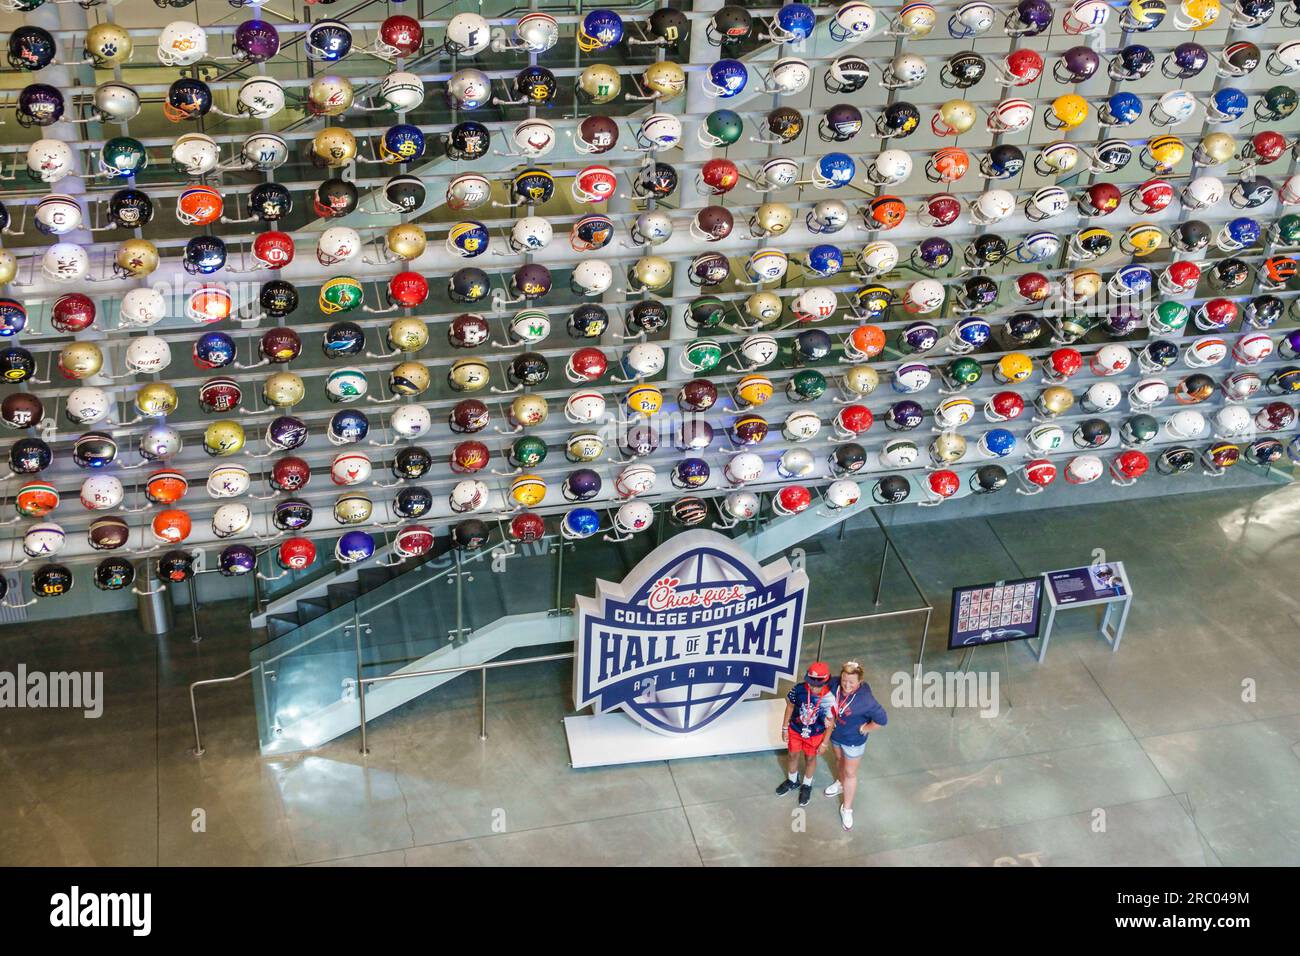 Atlanta Georgia,College Football Hall of Fame,team helmets helmet collection,Chick-fil-A corporate sponsor,inside interior indoors Stock Photo